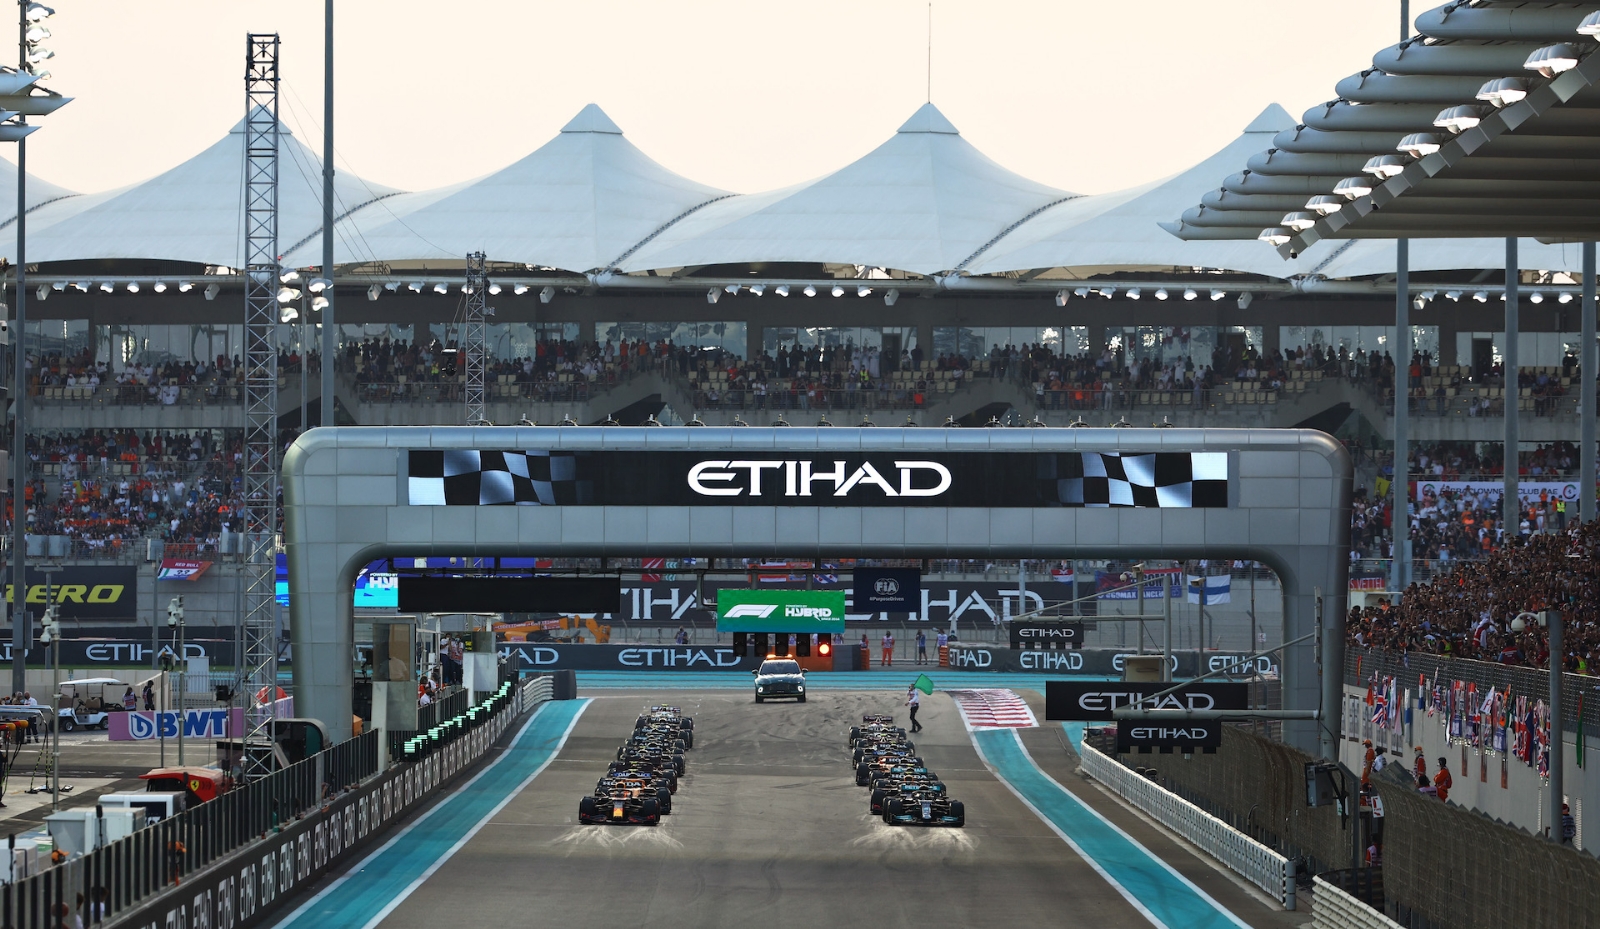 Gran Premio de Abu Dhabi Así luce el circuito de Yas Marina previo a